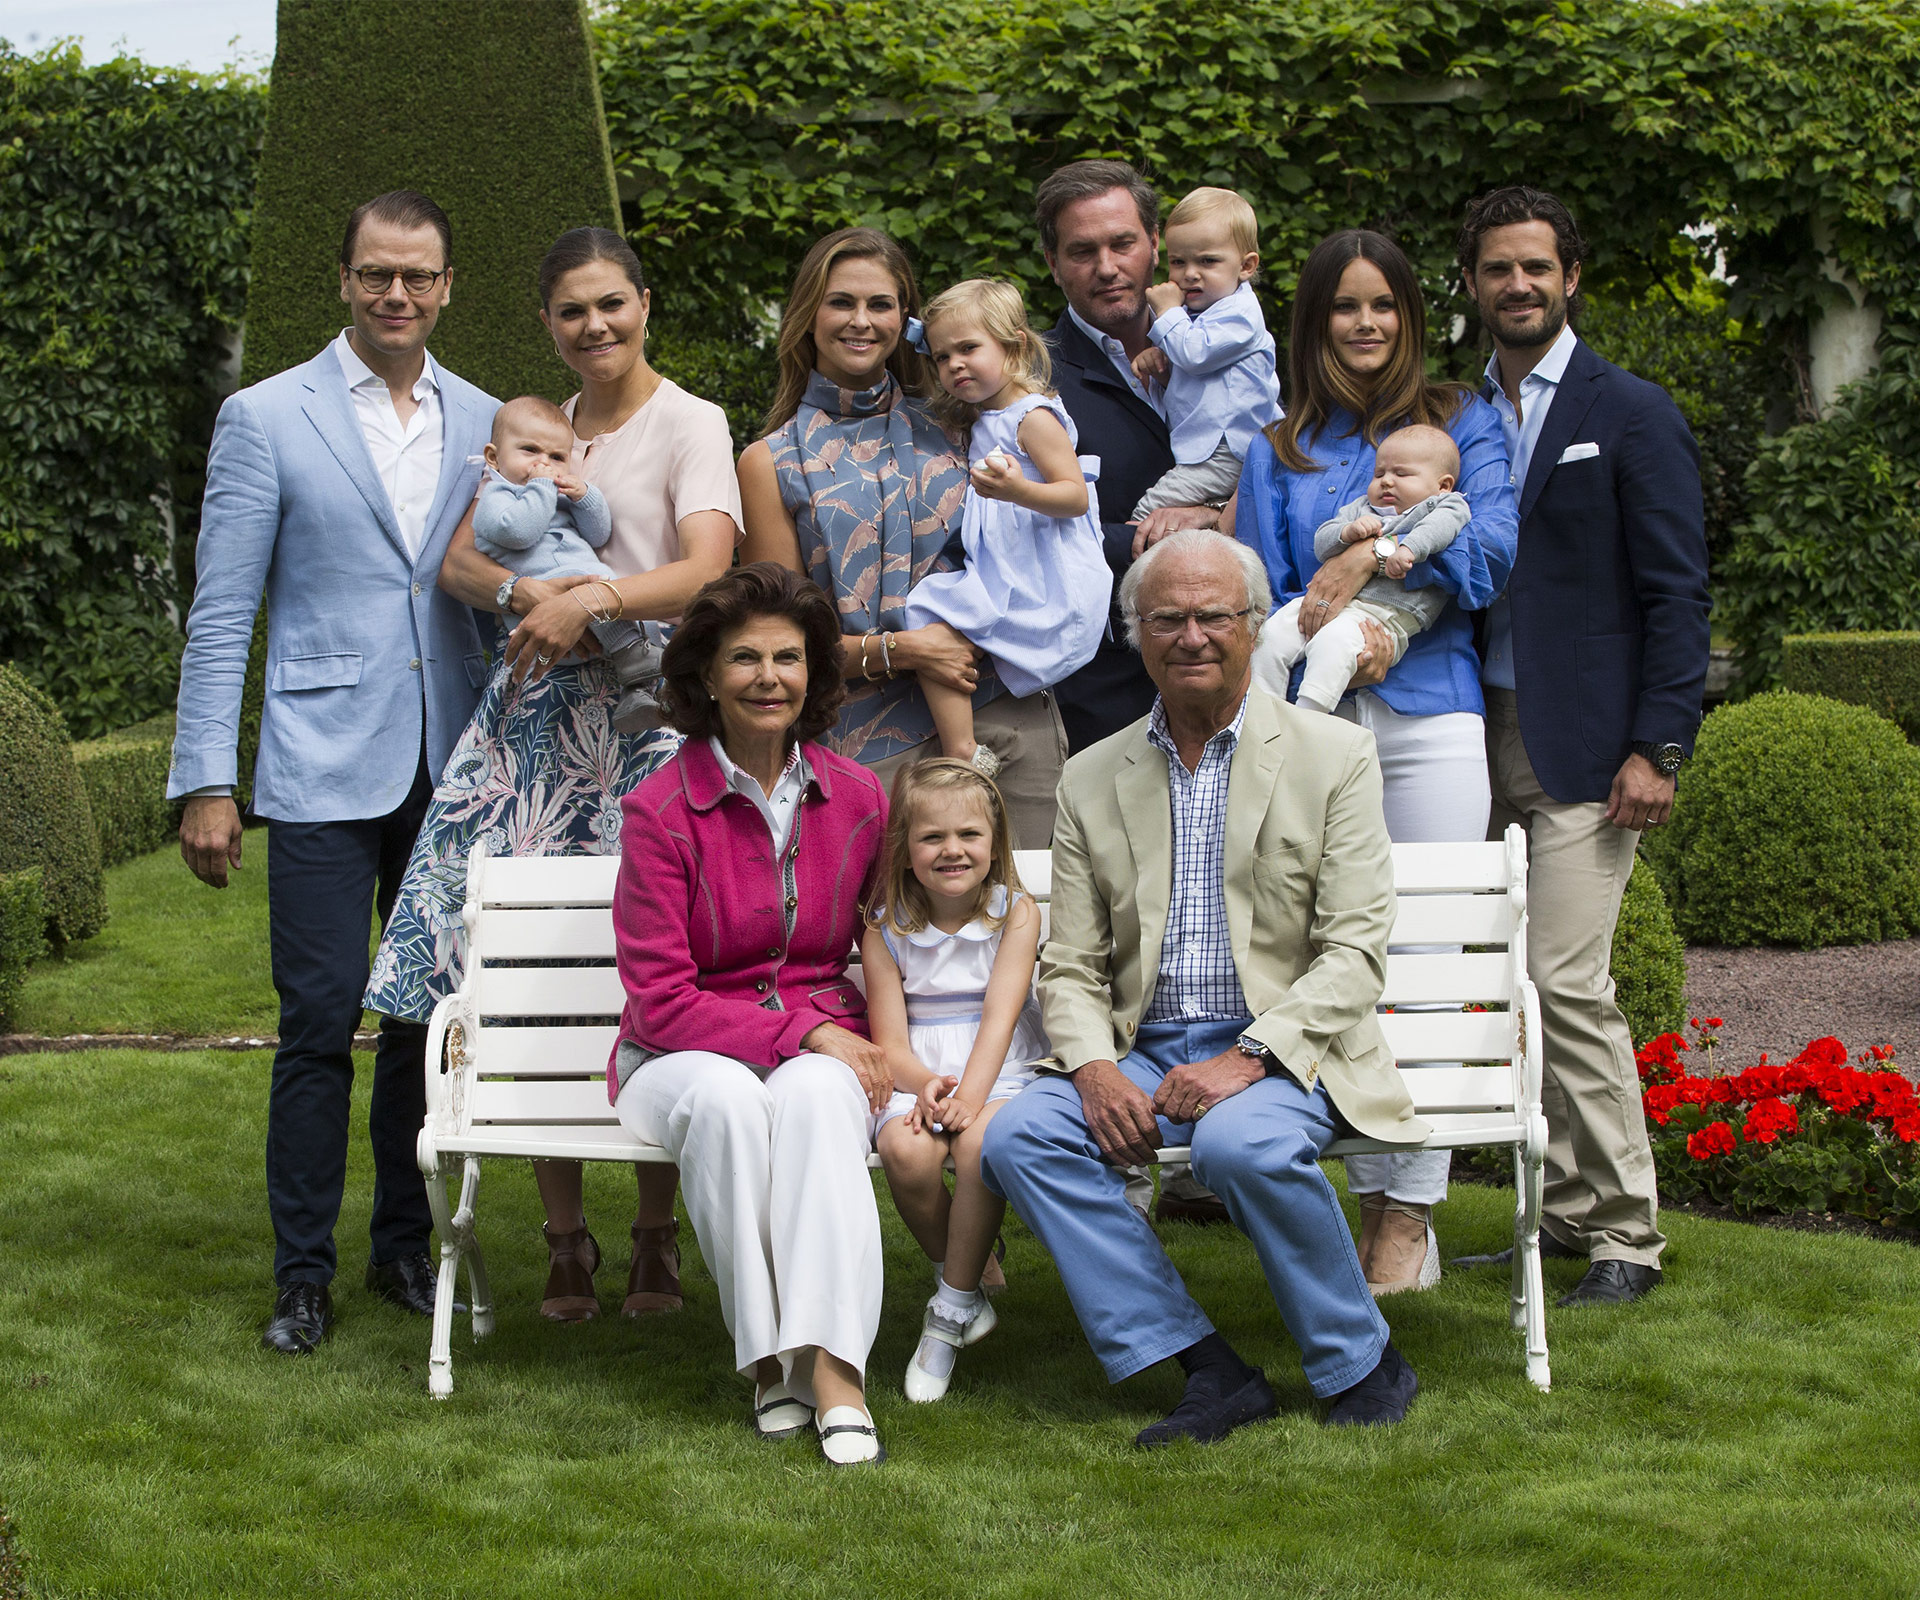 The Swedish Royal Family portrait